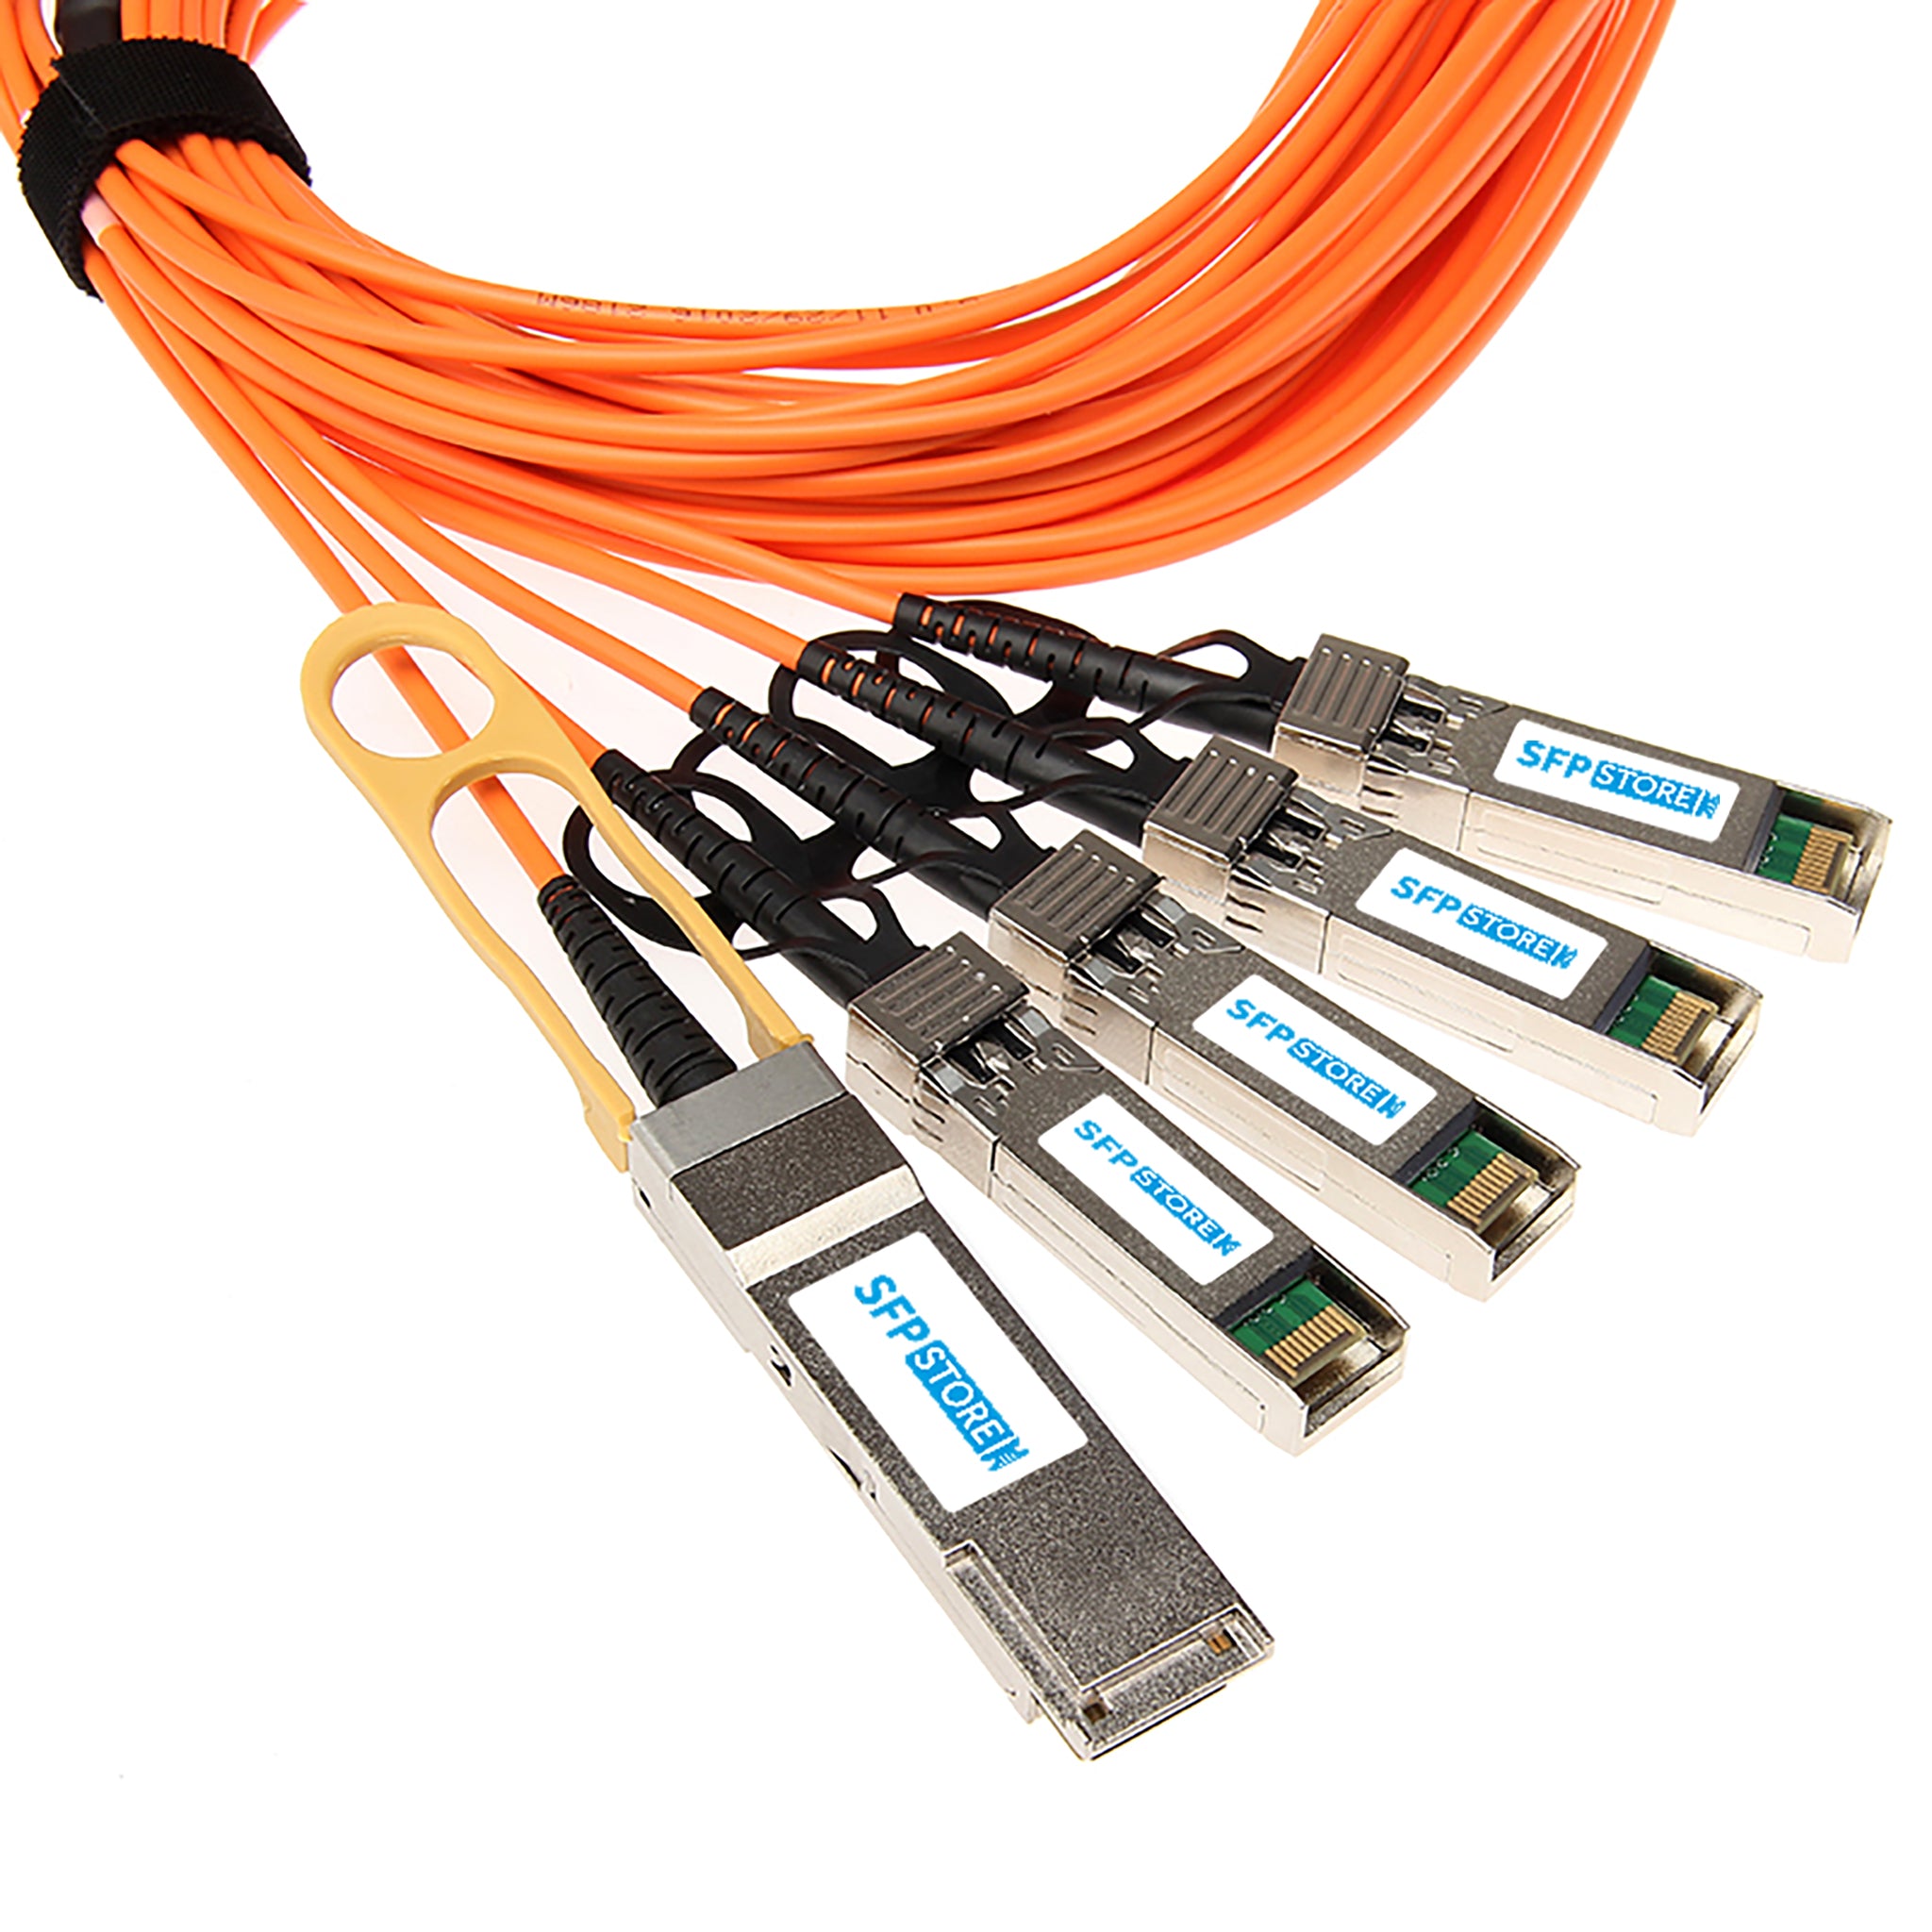 QSFP-4X10G-AOC1M-C - 1m Cisco Compatible 40G QSFP+ to 4 x 10G SFP+ Active Optical Cable